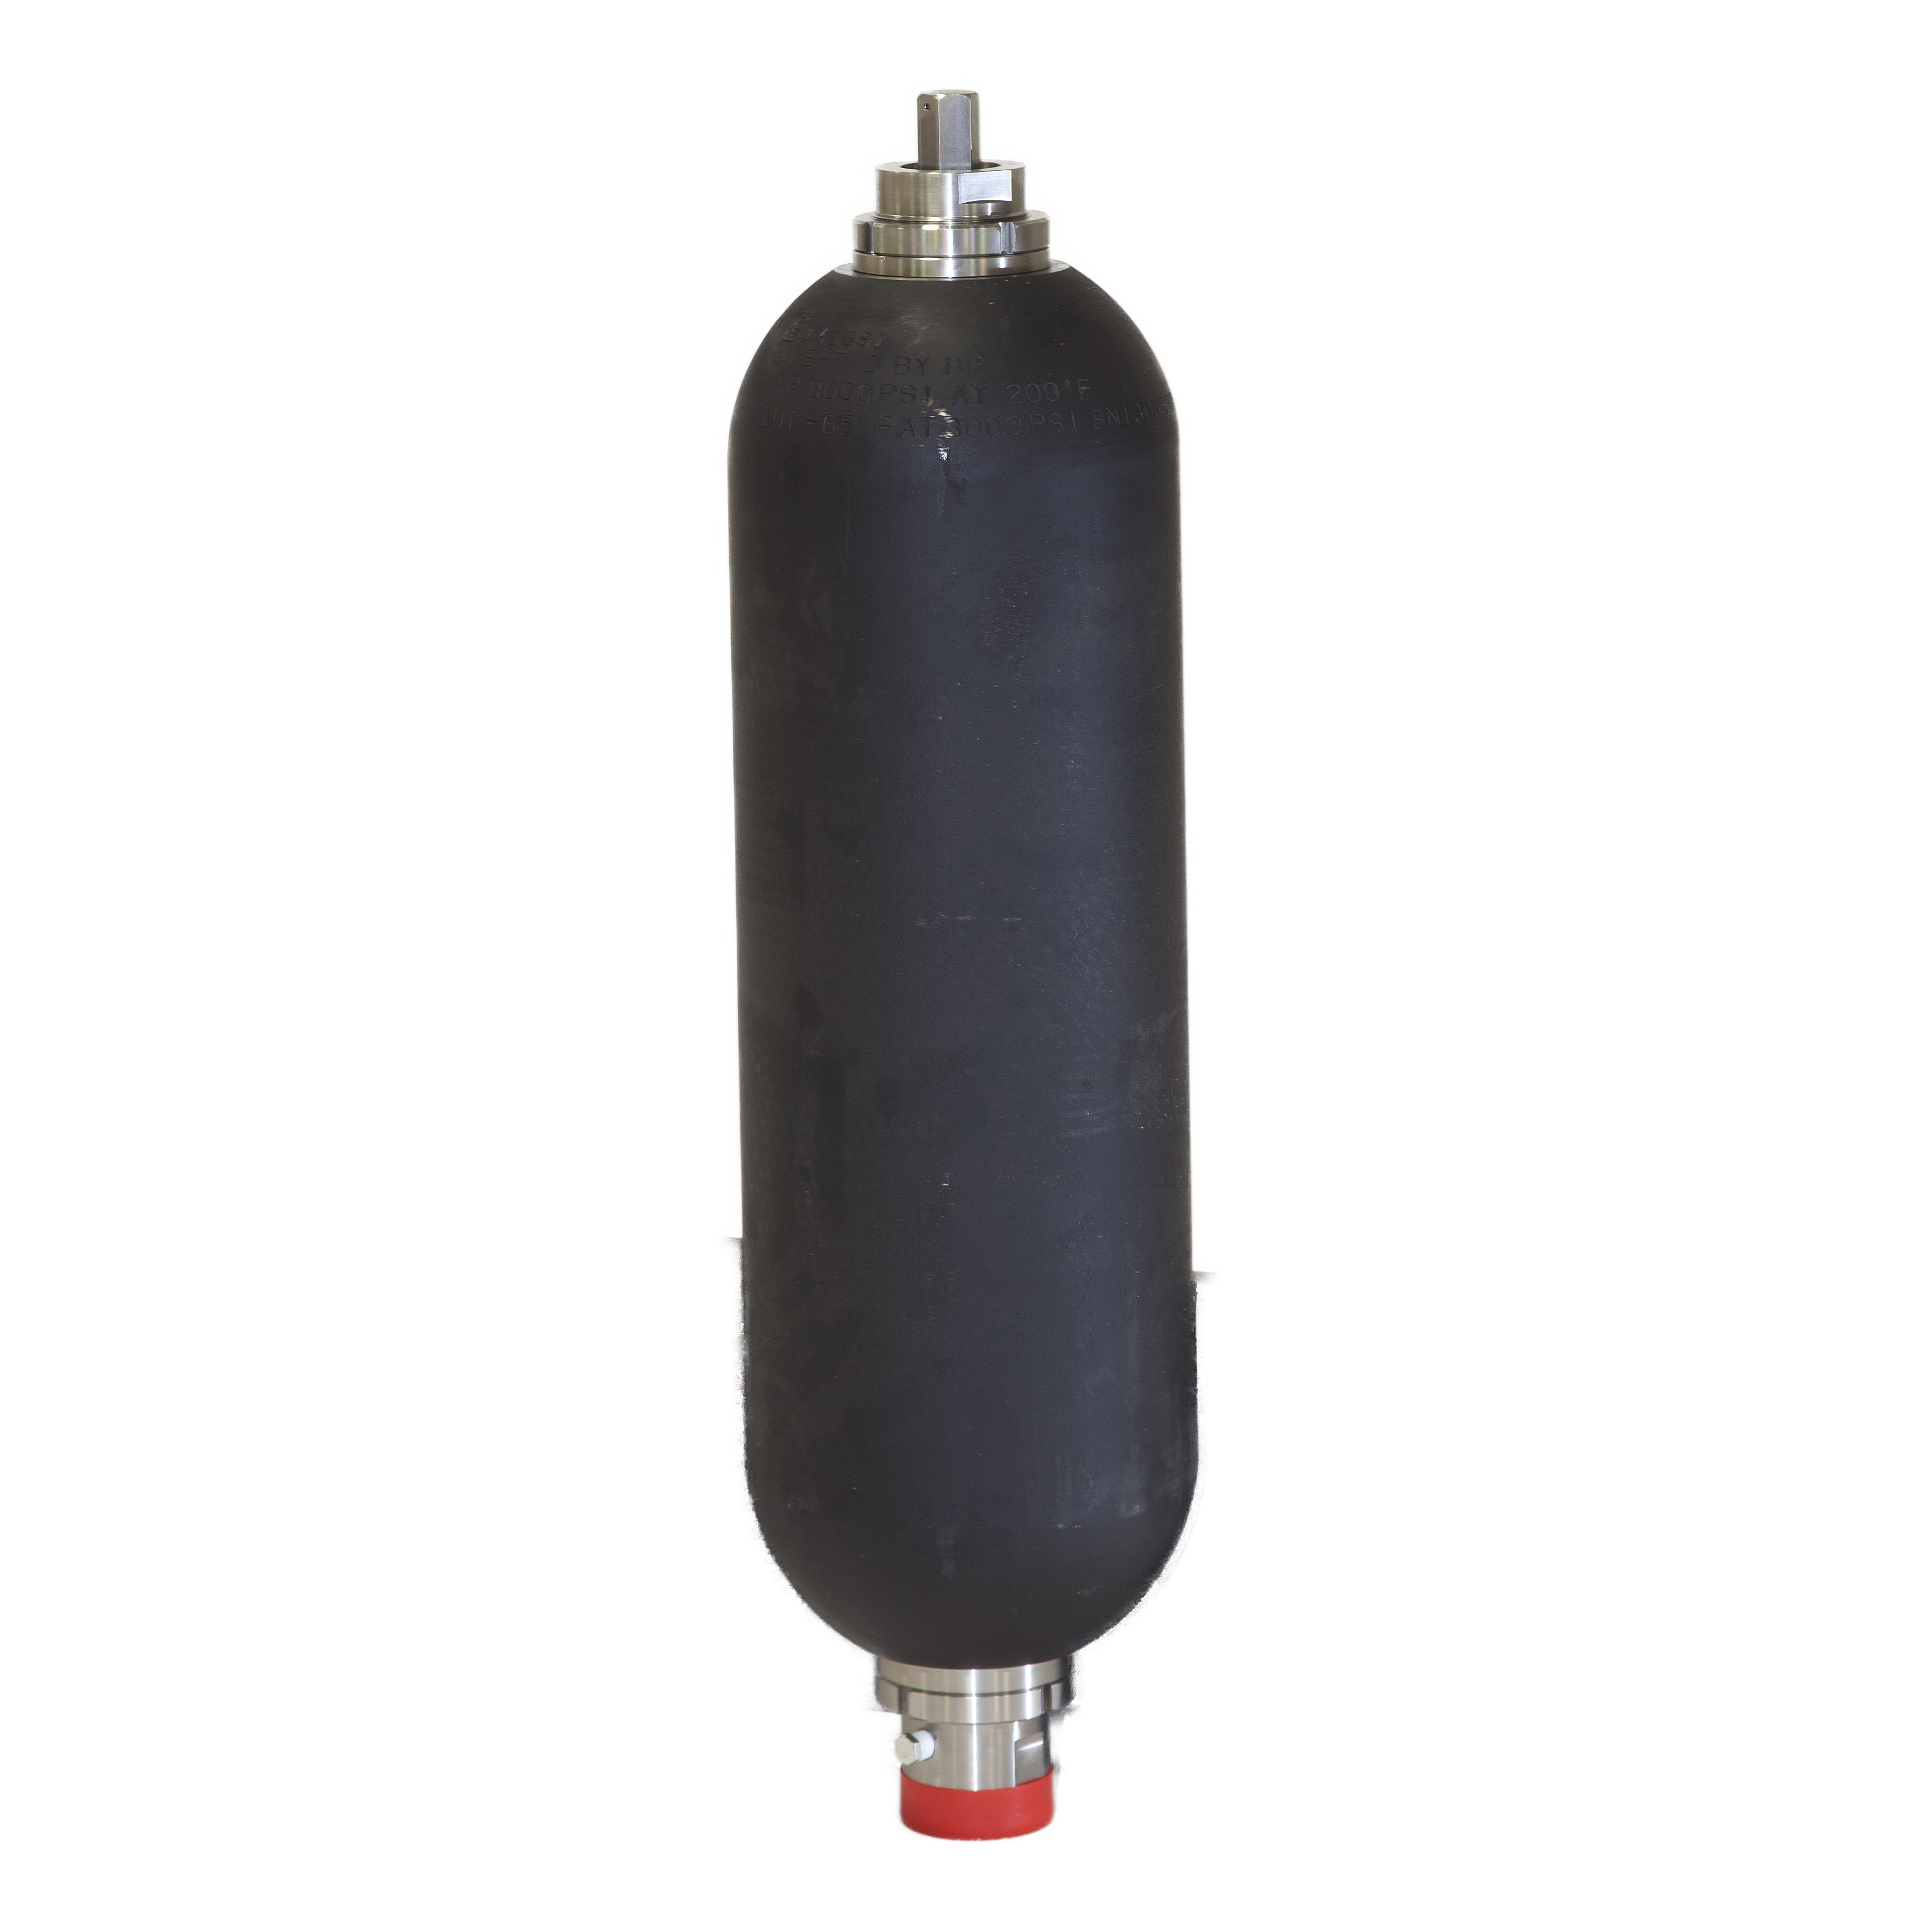 GB01-03-ND-N-O-1-A : SFP Gas Bottles 3000psi, 3000psi, 0.25 Gallon (1 Quart), 1" NPT